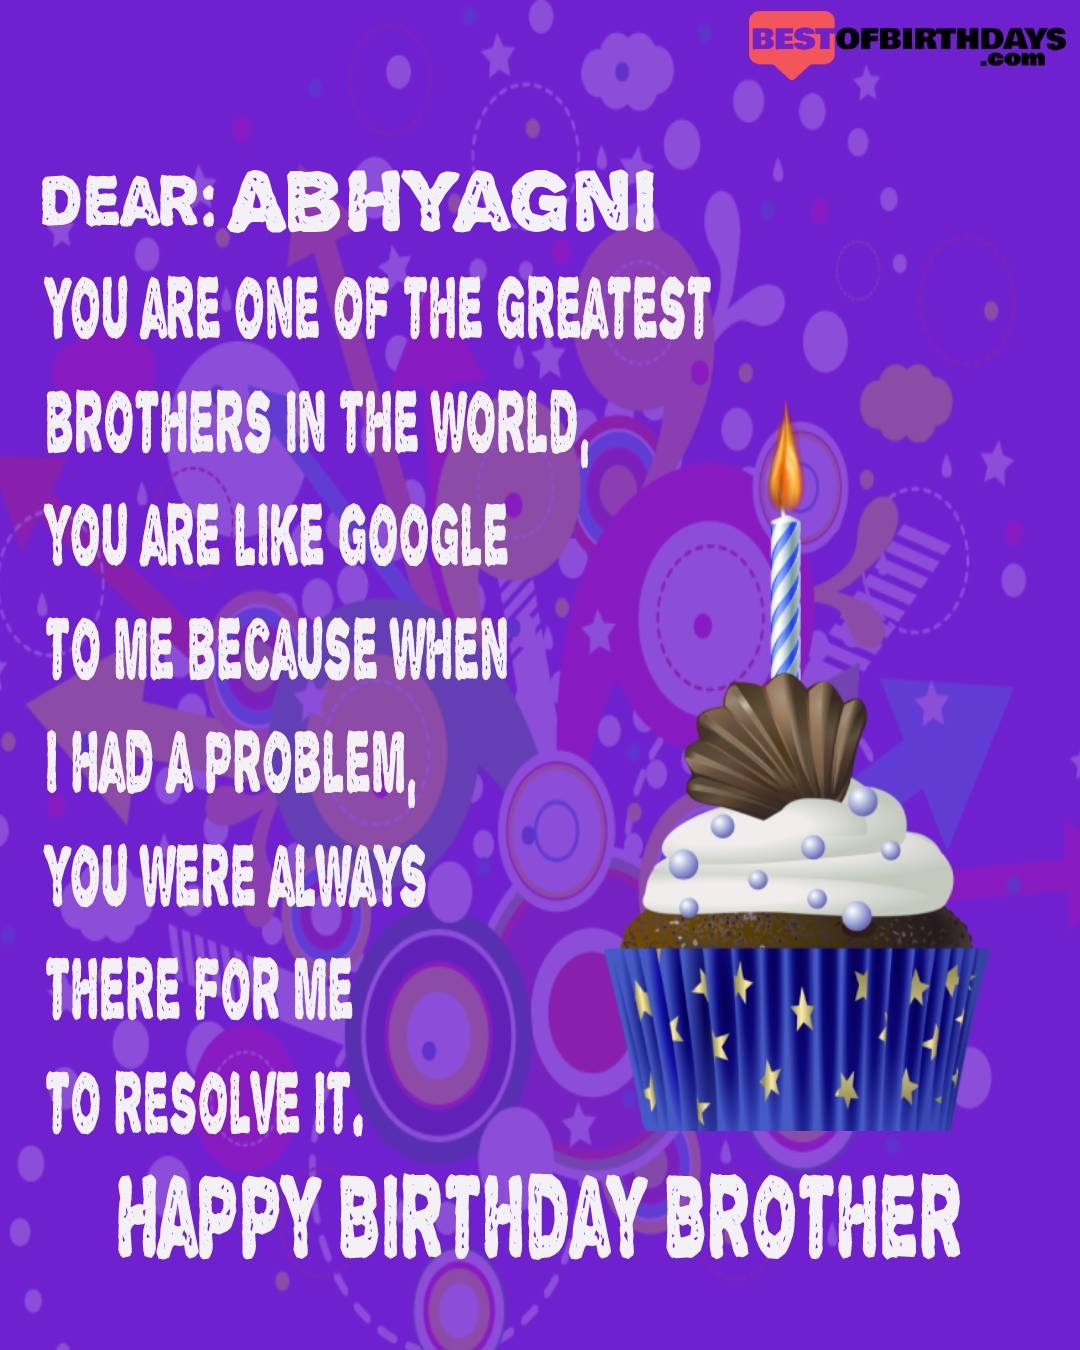 Happy birthday abhyagni bhai brother bro